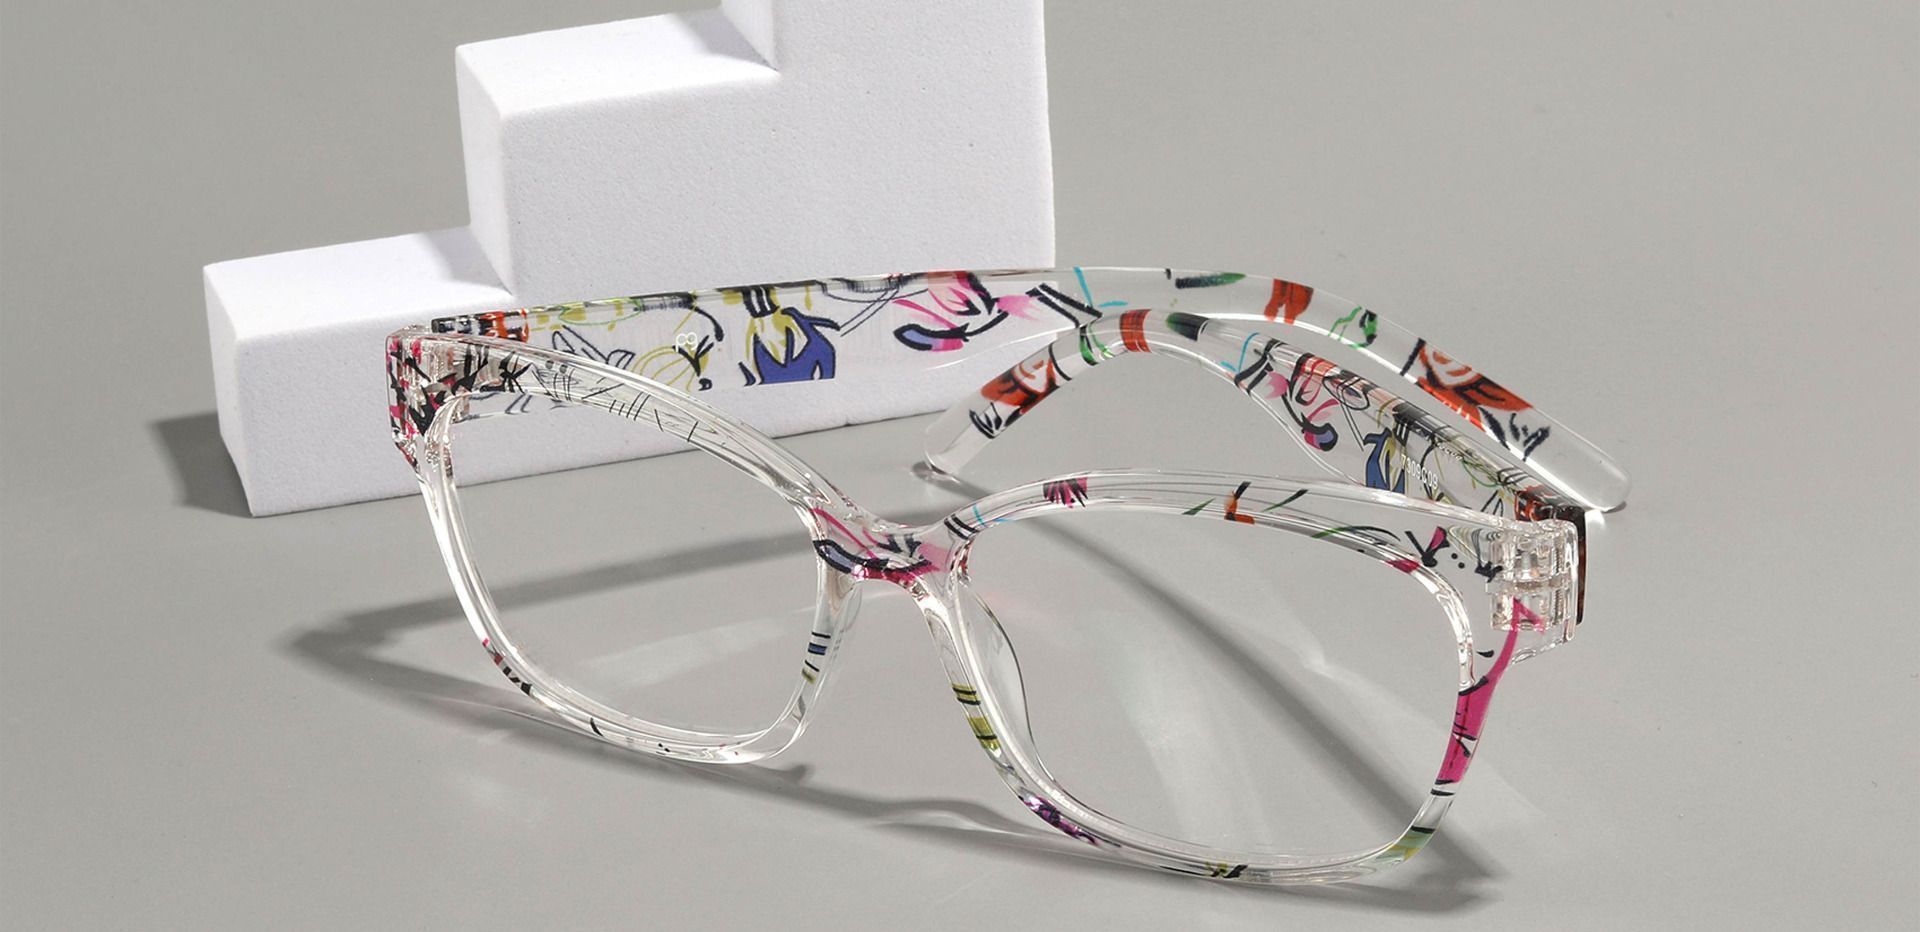 Adele Cat Eye Prescription Glasses - Clear